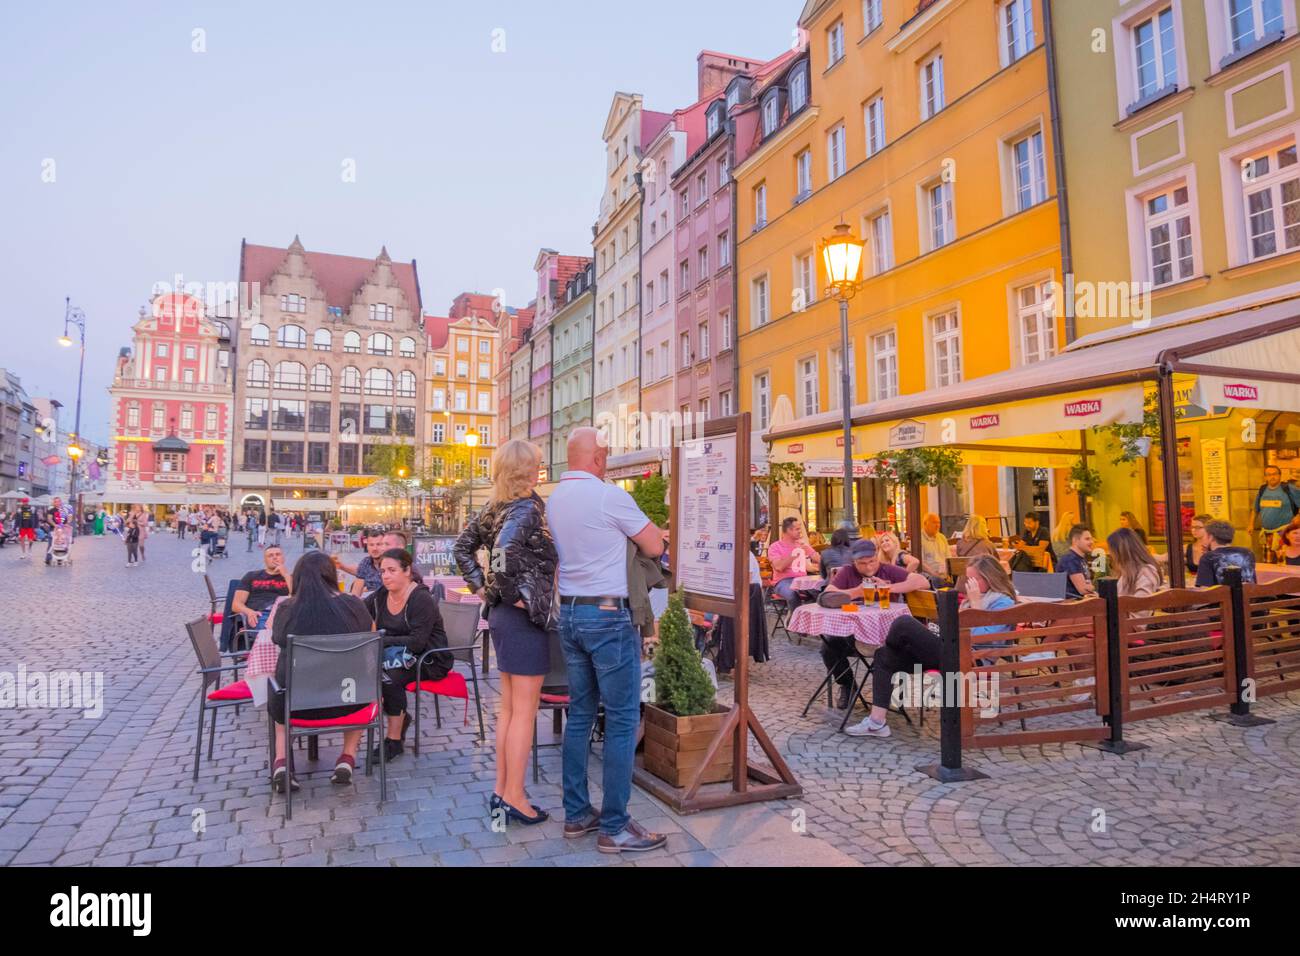 Restaurant terraces, Rynek, market square, old town, Wroclaw, Poland Stock Photo